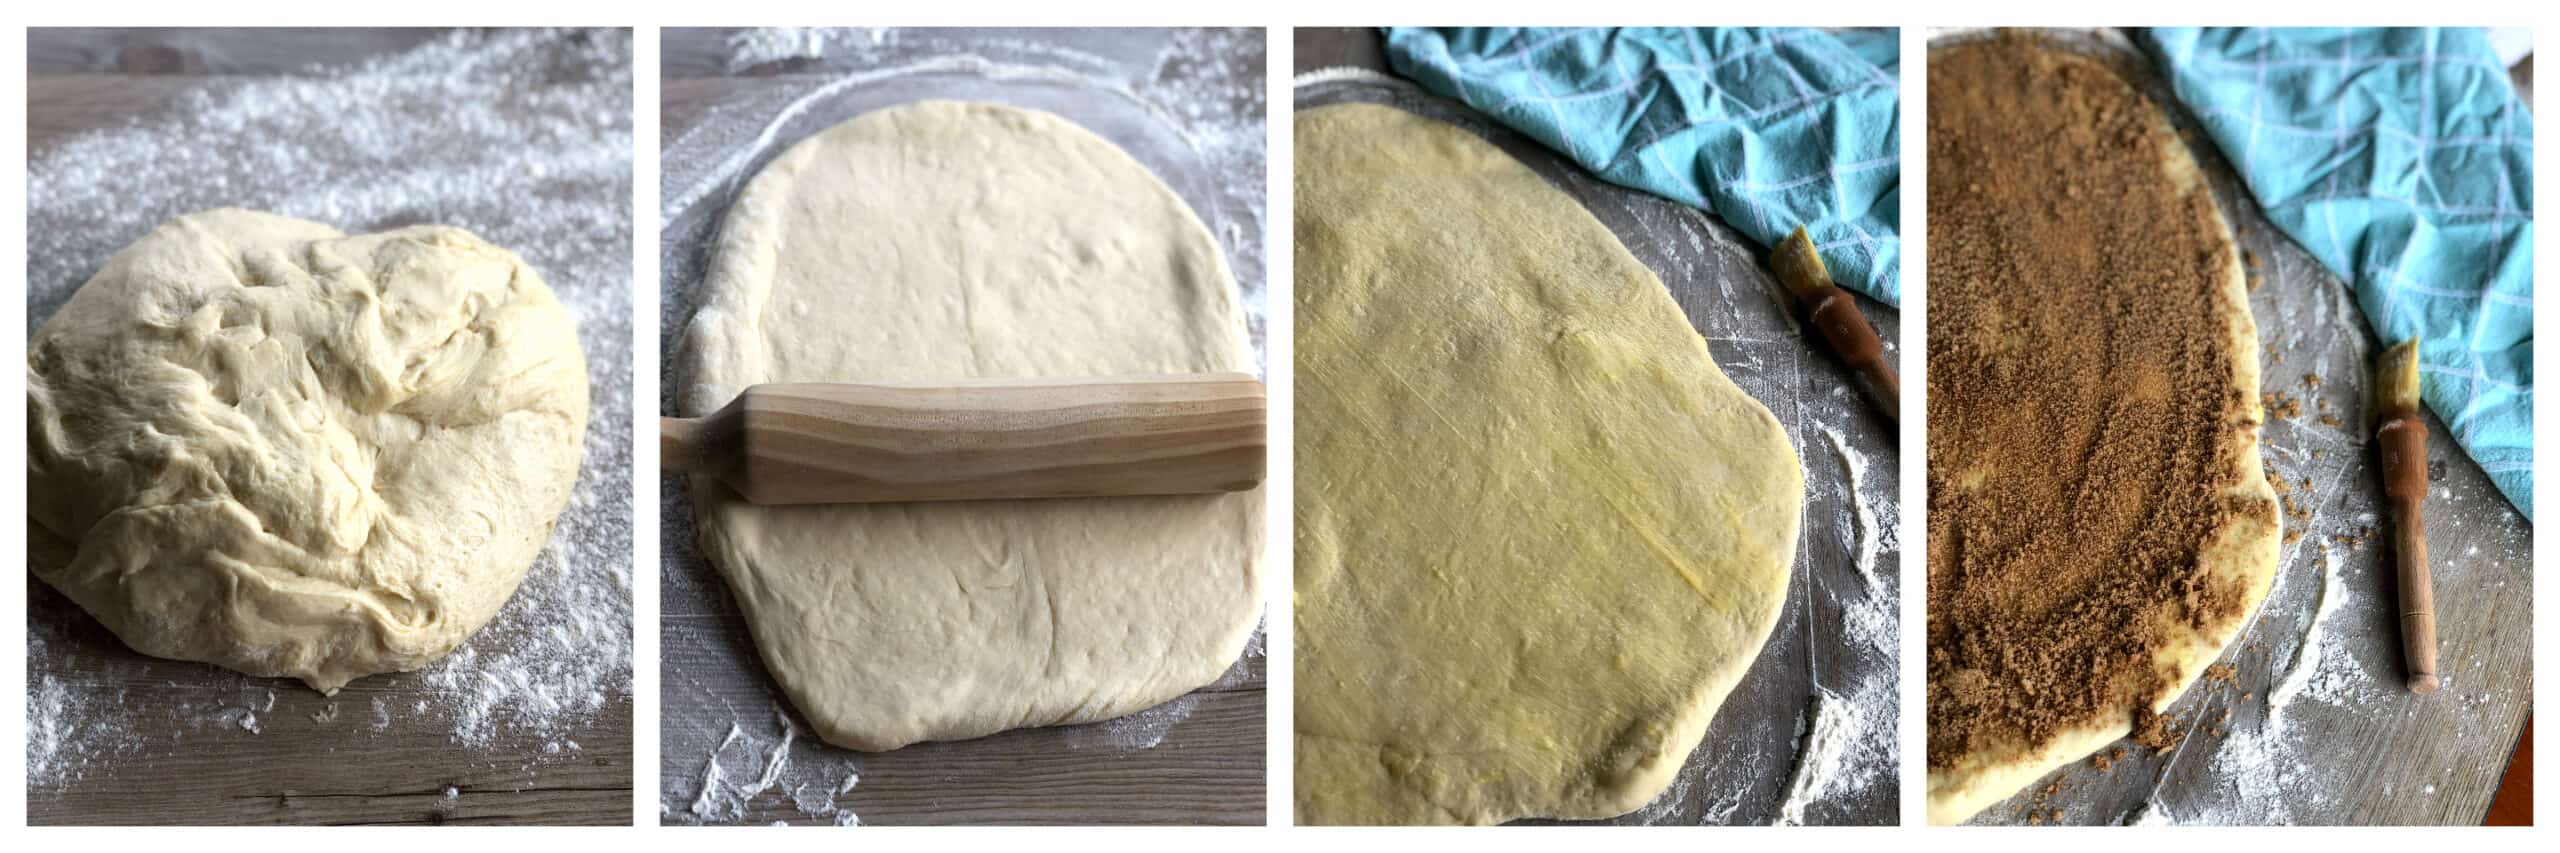 How to Make Cinnamon Soft Rolls Dough